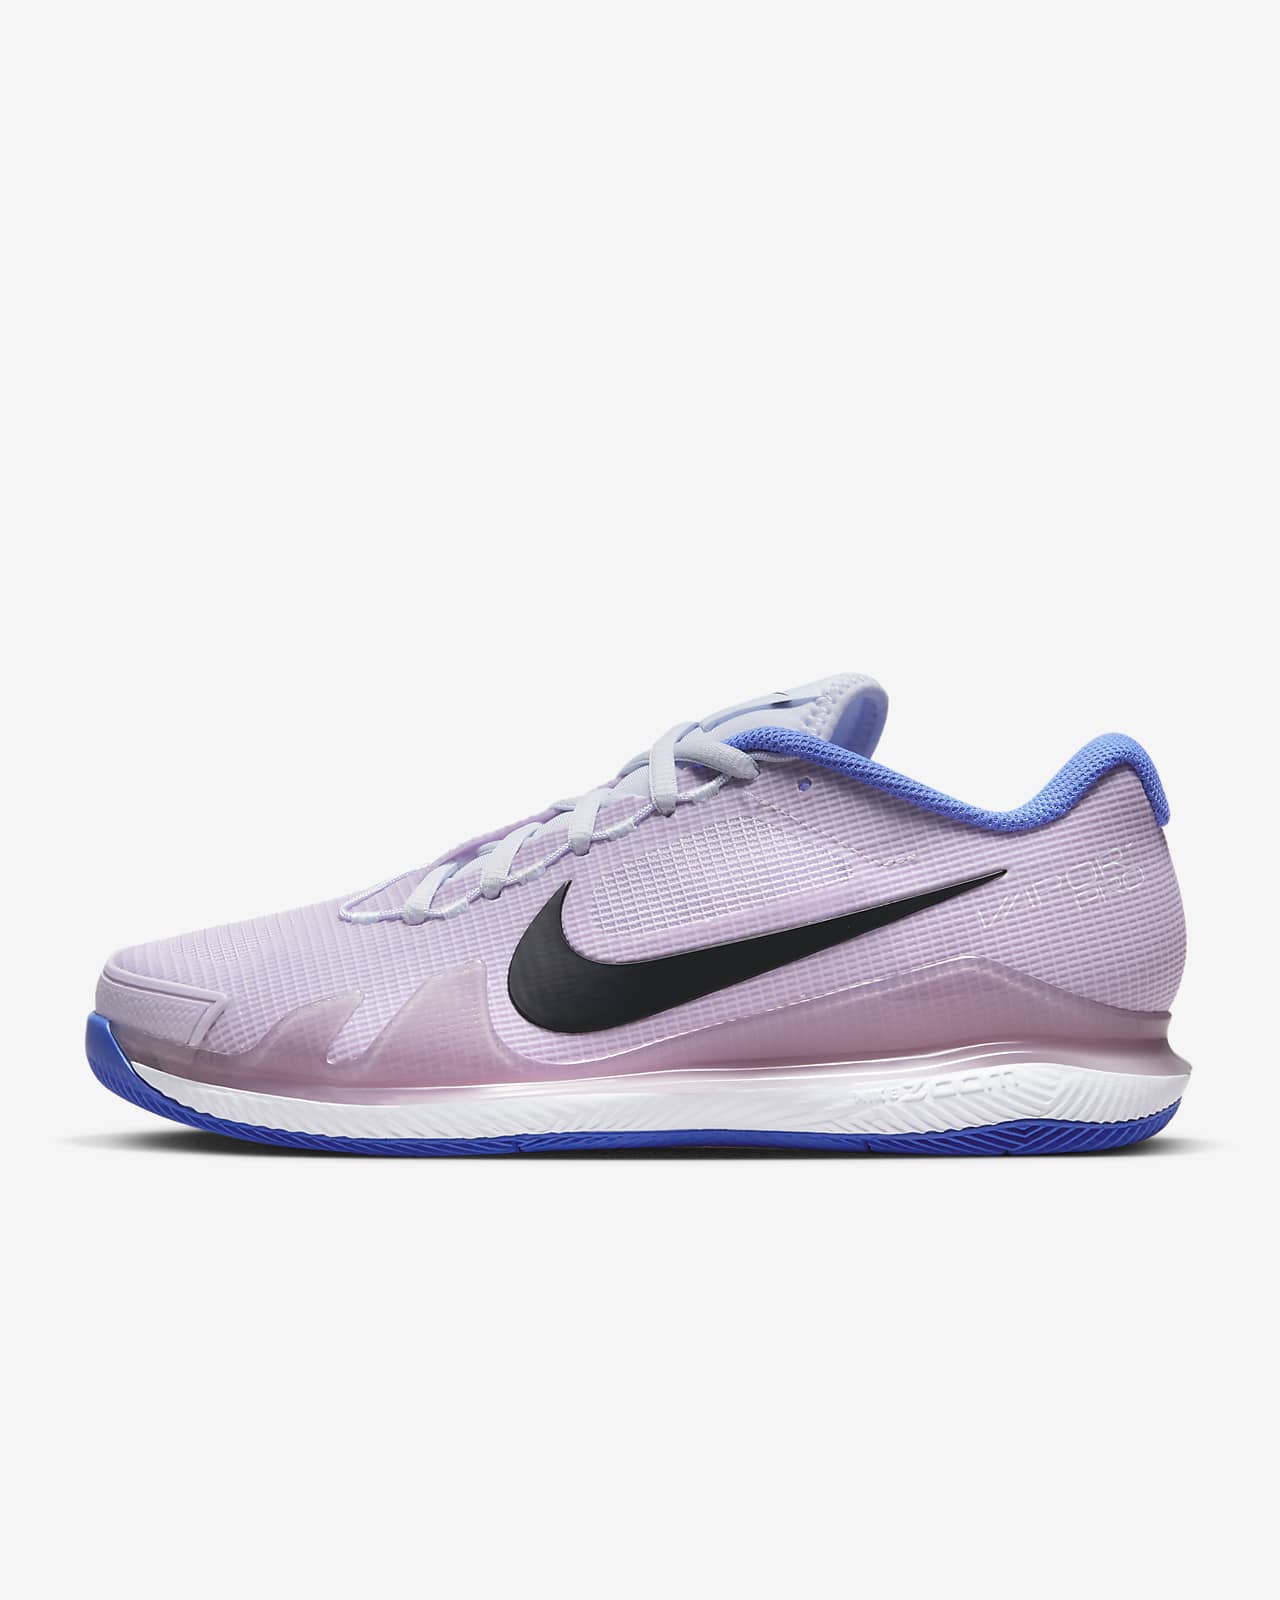 NikeCourt Air Zoom Vapor Pro Women's Hard-Court Tennis Shoe